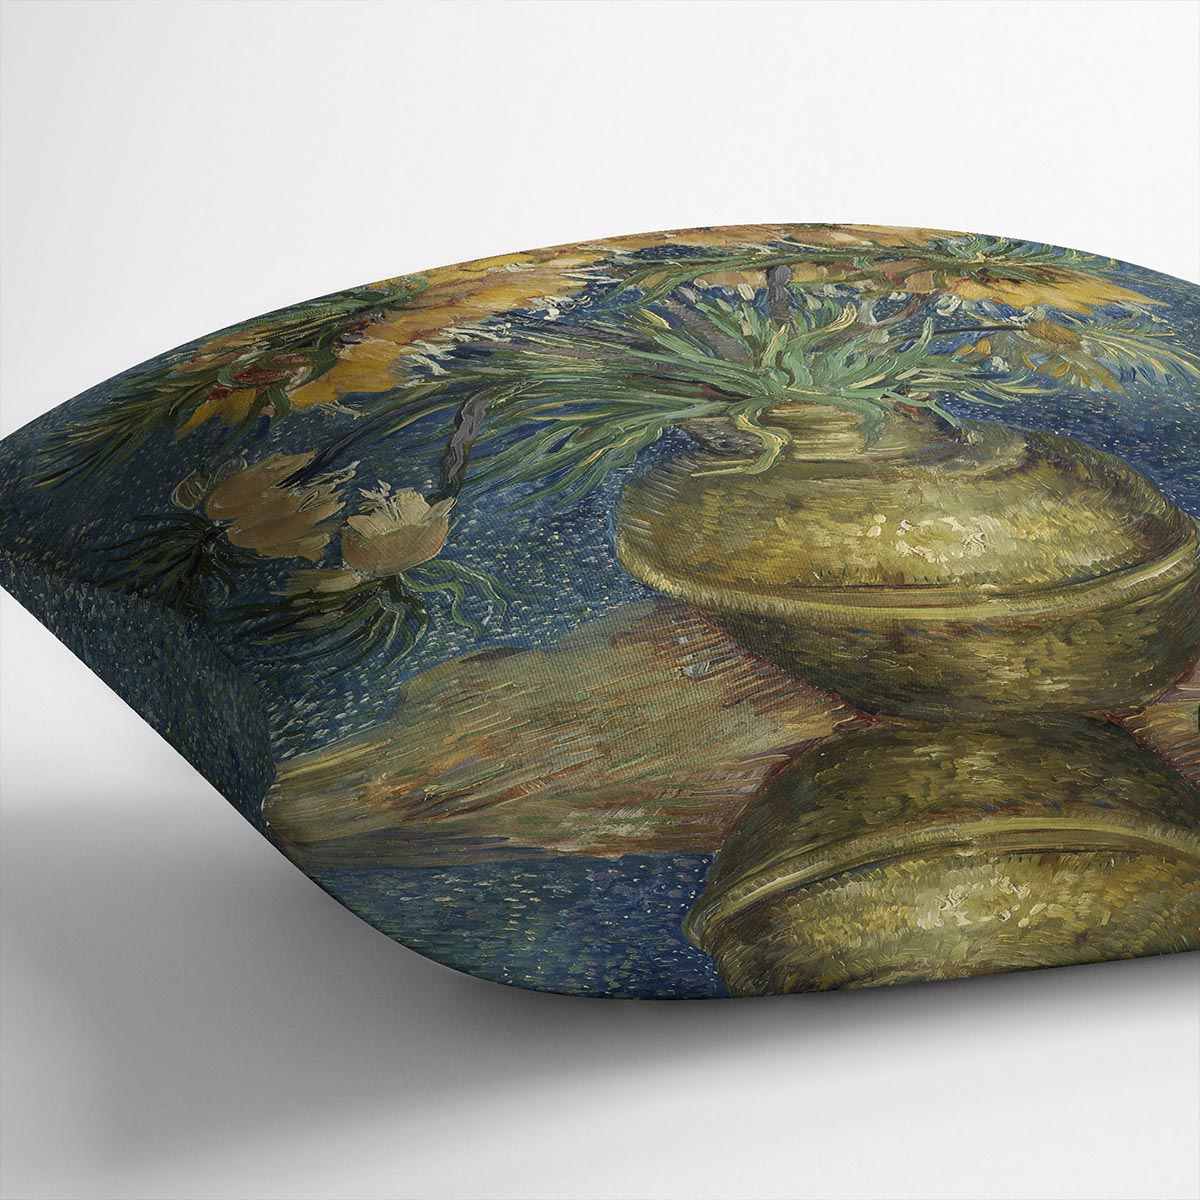 Van Gogh Fritillaries in a Copper Vase Cushion